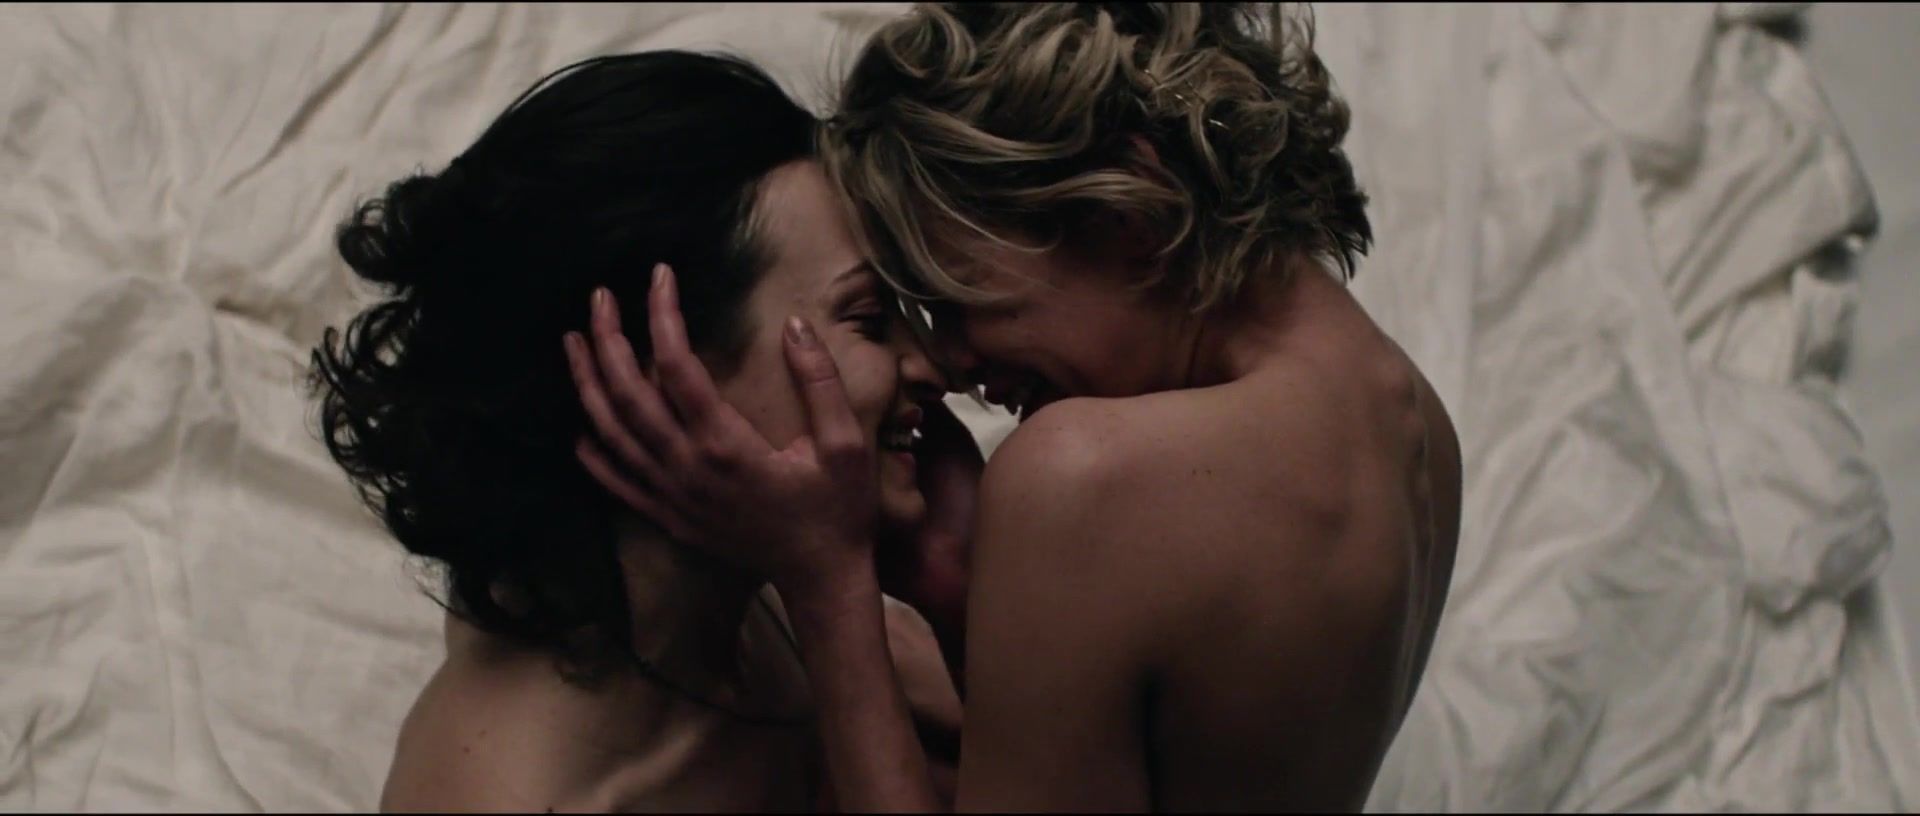 Cdmx Compulsion - Lesbian Sex Movie Gaystraight - 1